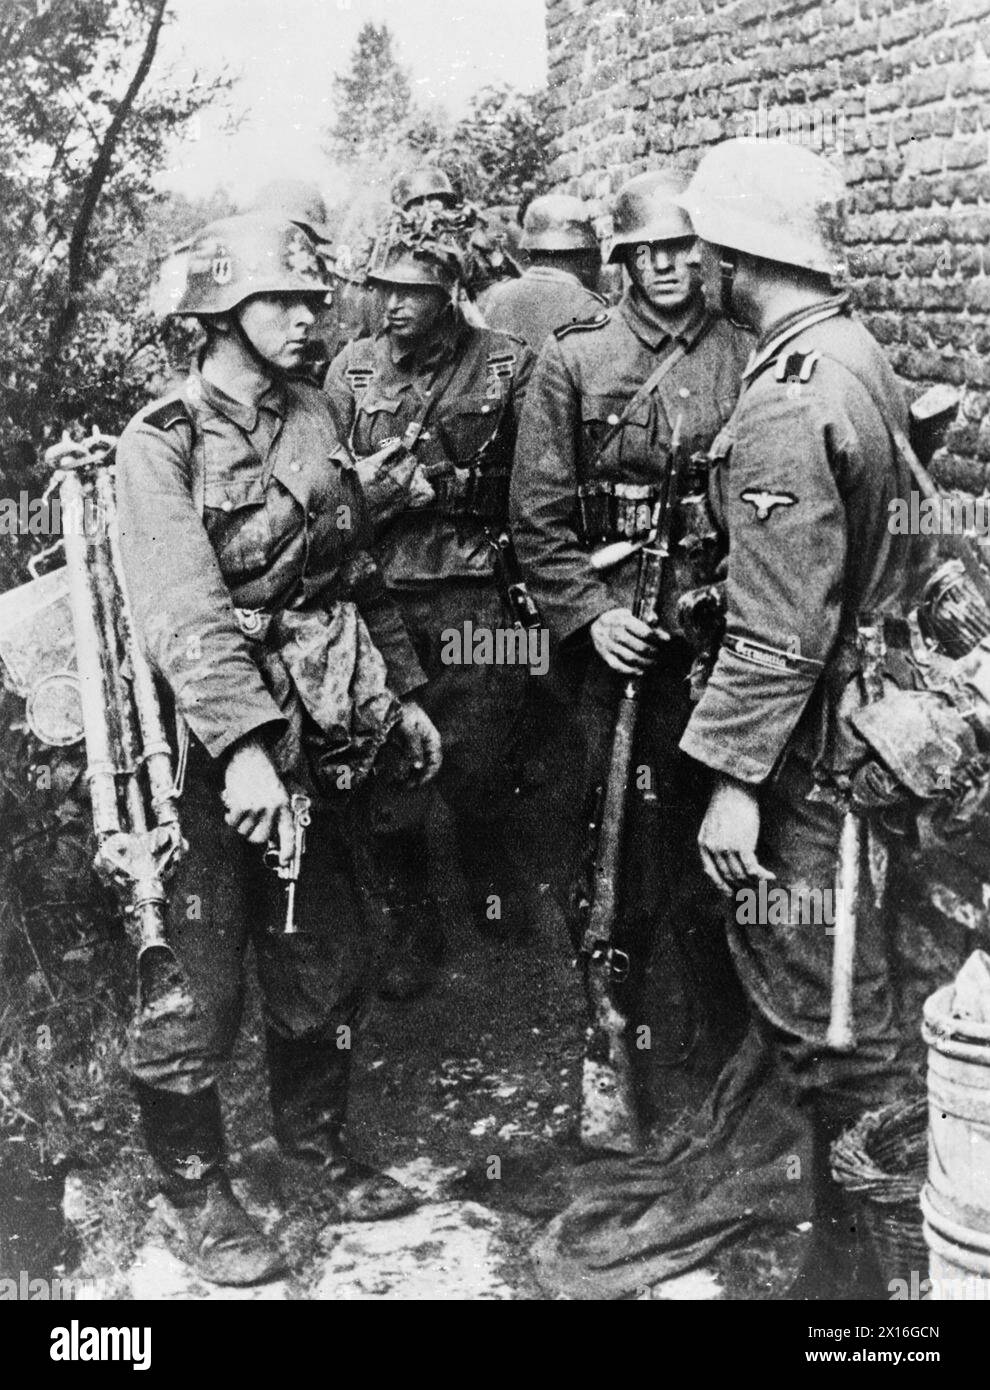 SCHUTZSTAFFELN (SS) - truppe Waffen SS del reggimento "Germania". Data sconosciuta Esercito tedesco (terzo Reich), Schutzstaffel (SS) Foto Stock